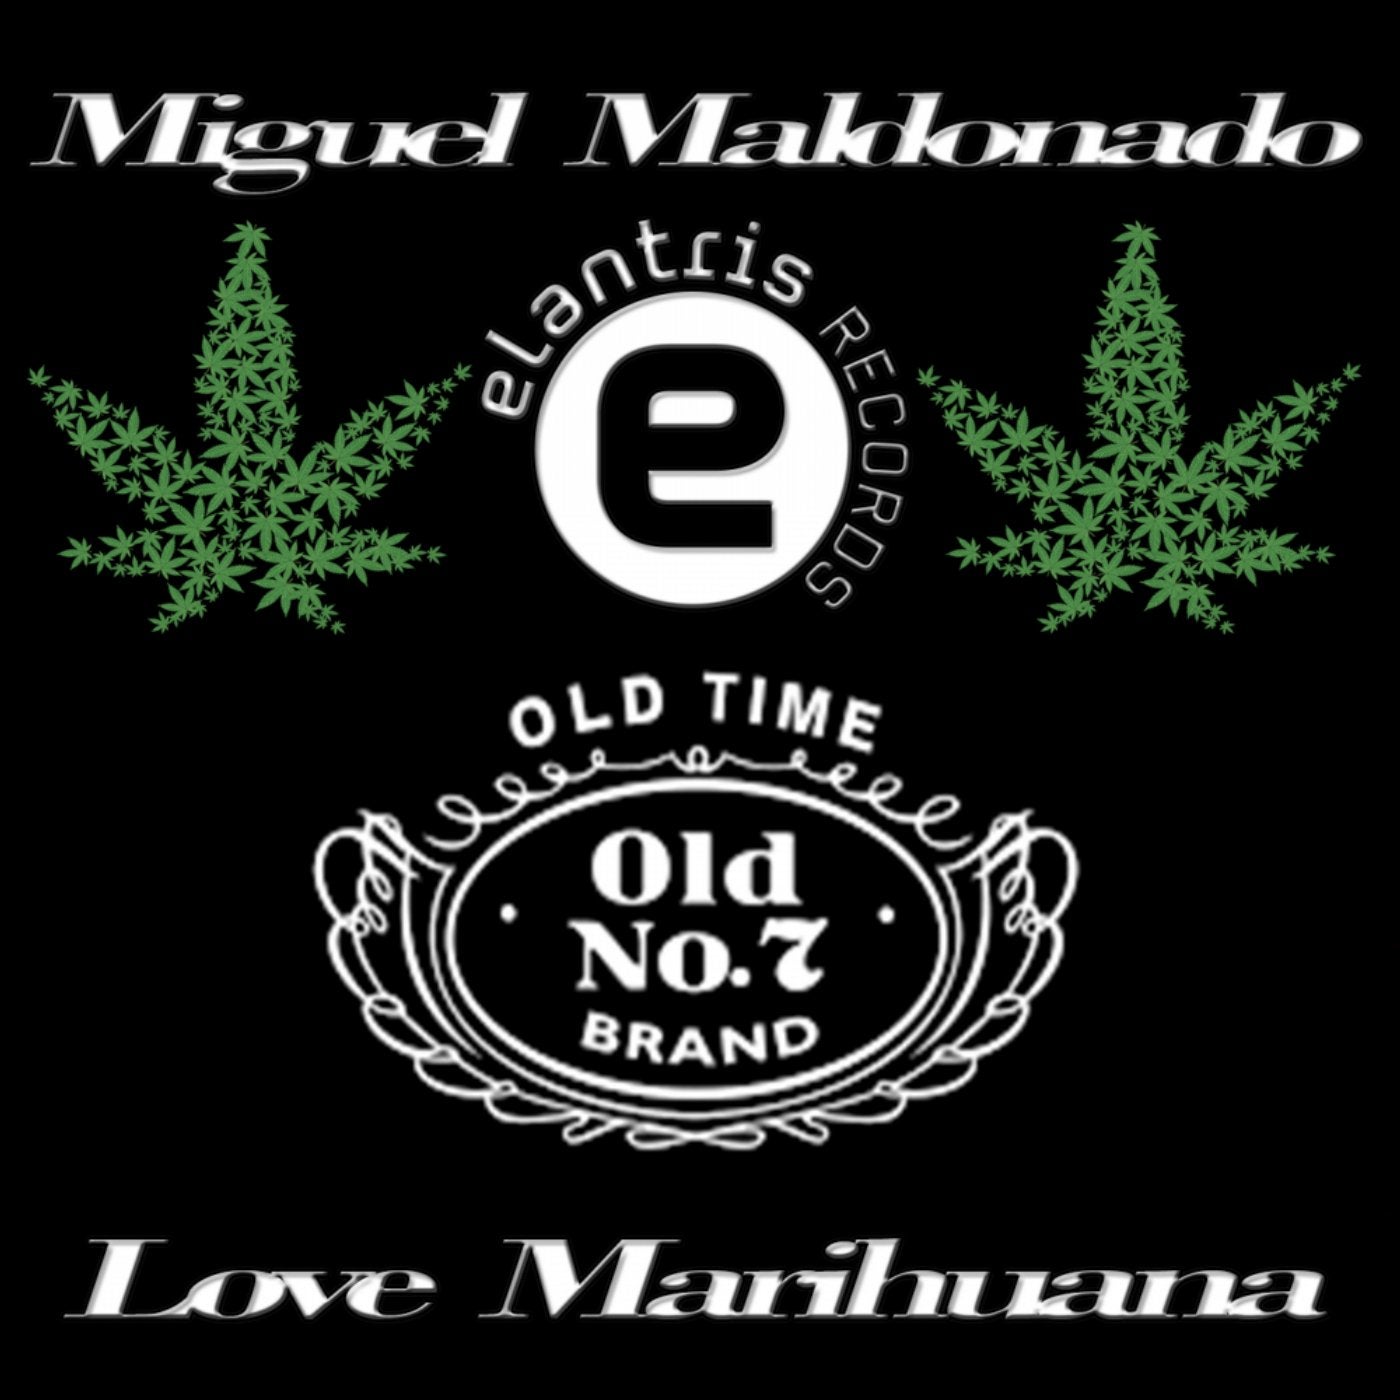 Love Marihuana